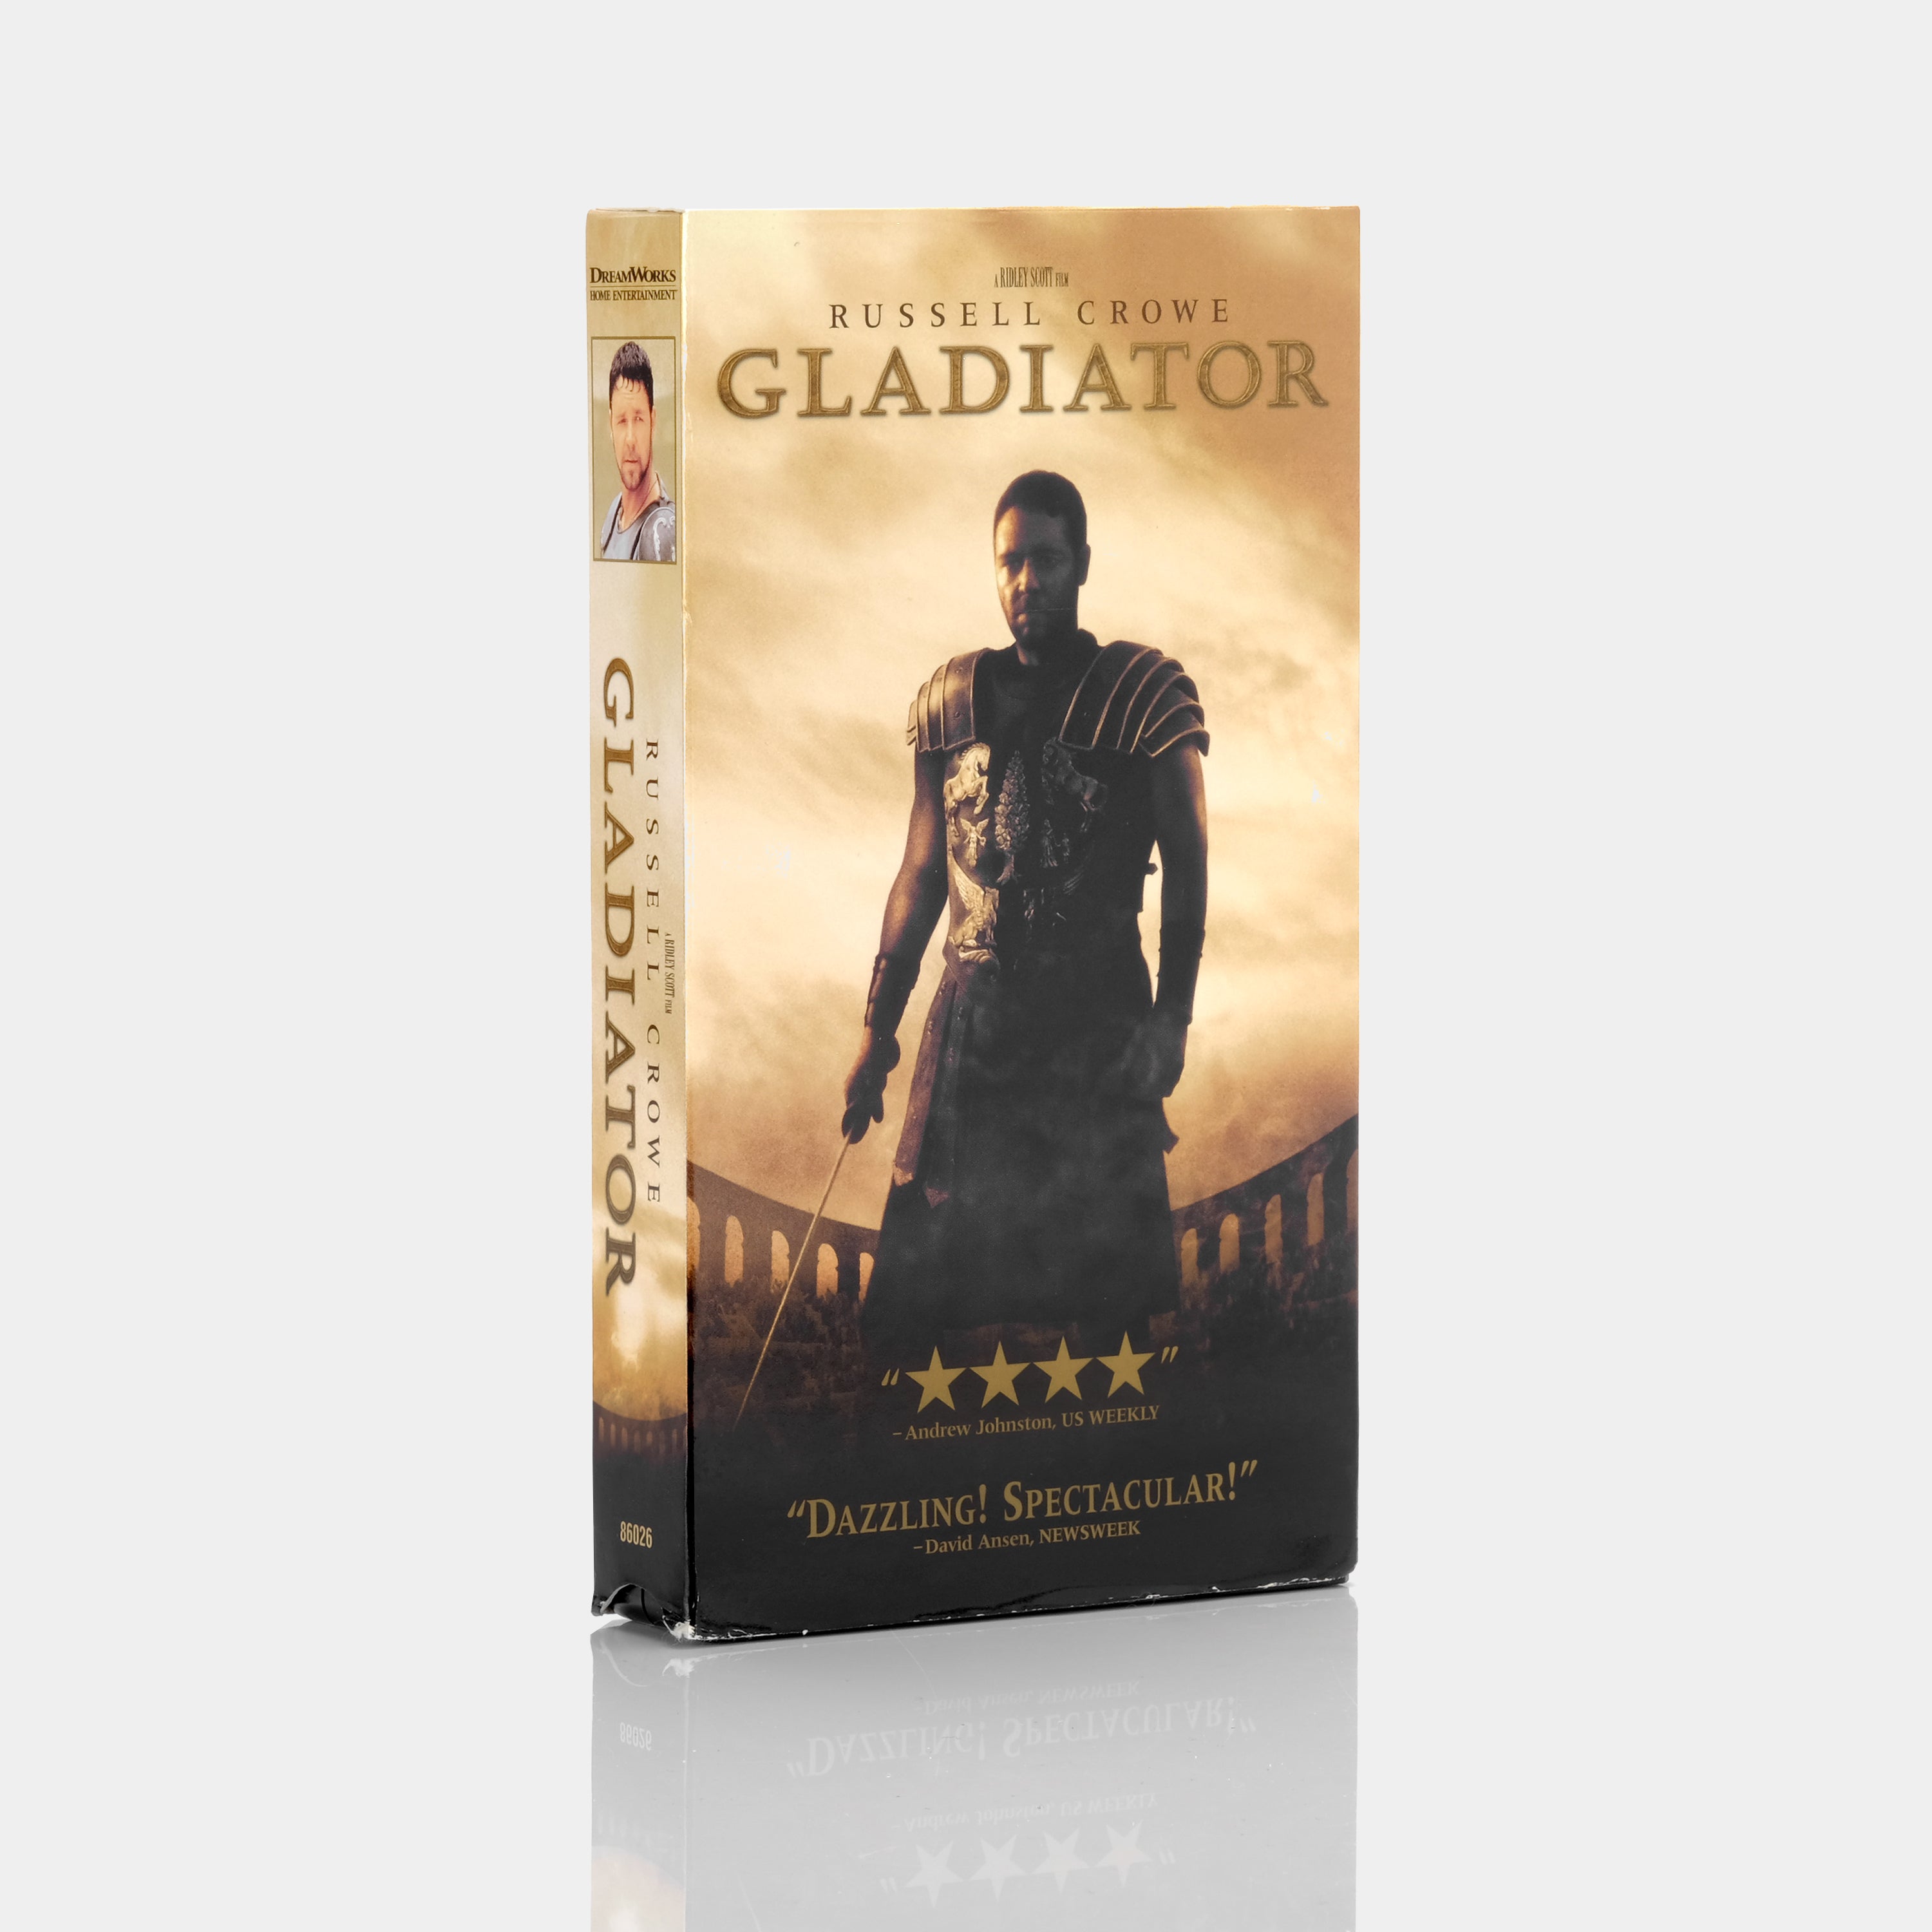 Gladiator VHS Tape